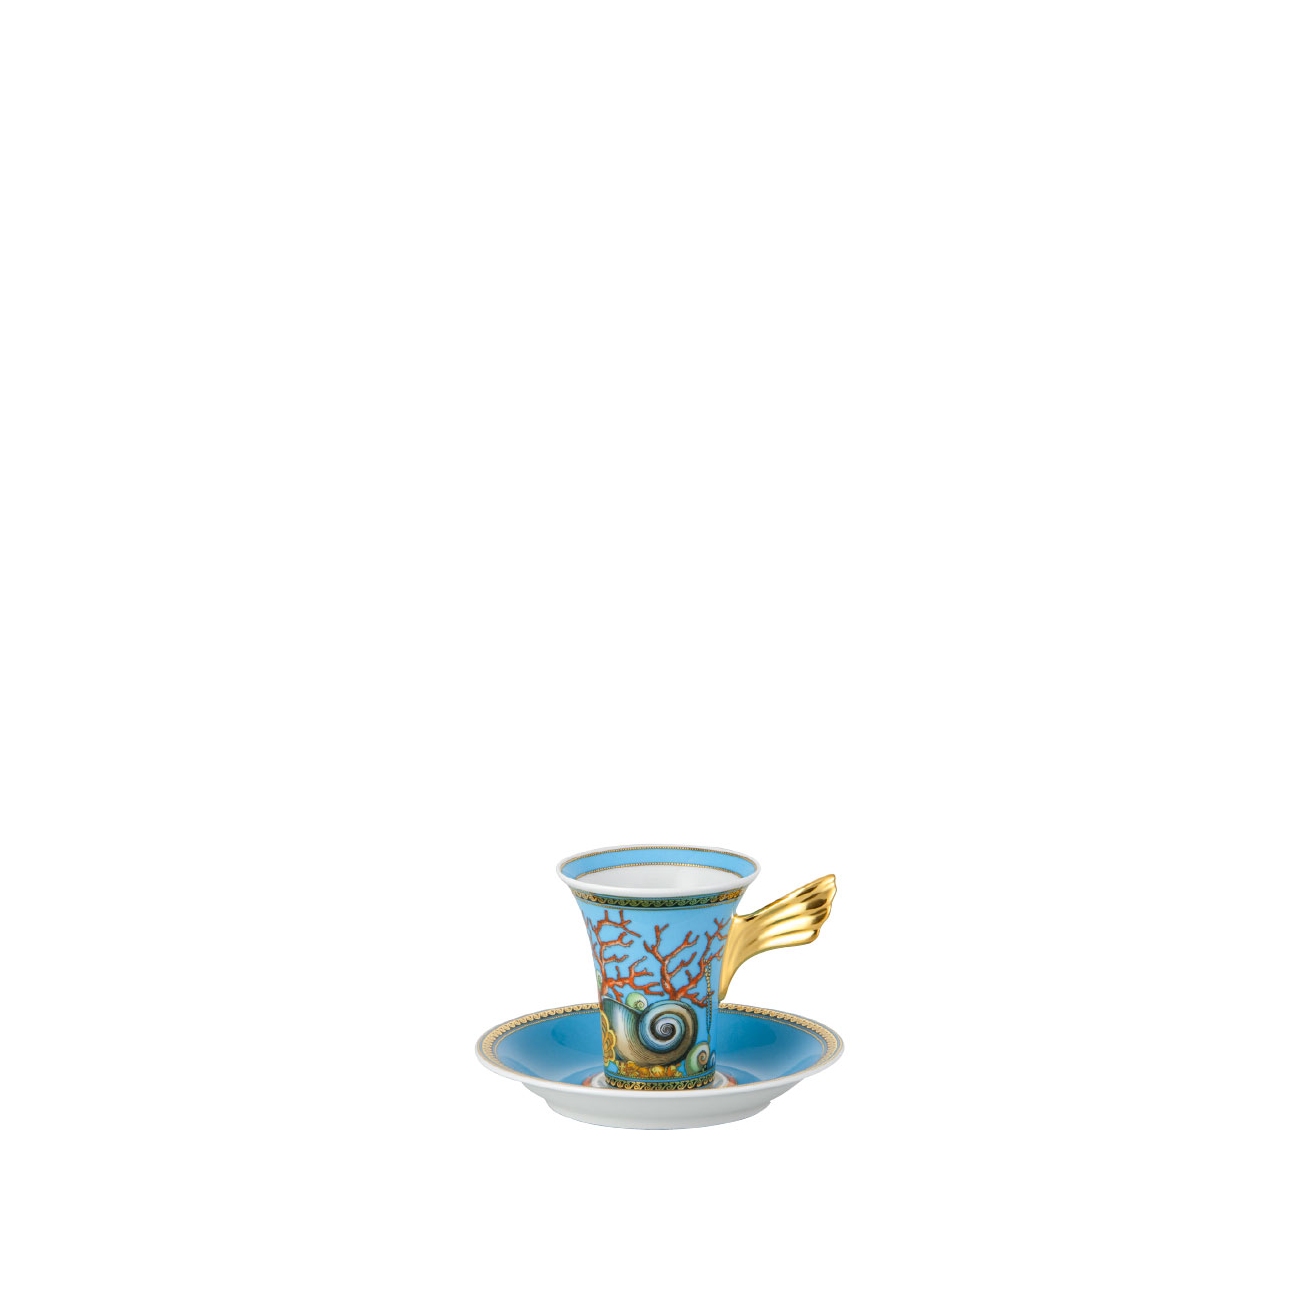 La Doree Espresso /Mokka Tasse 2-tlg./ espresso cup by Rosenthal Versace Vanity